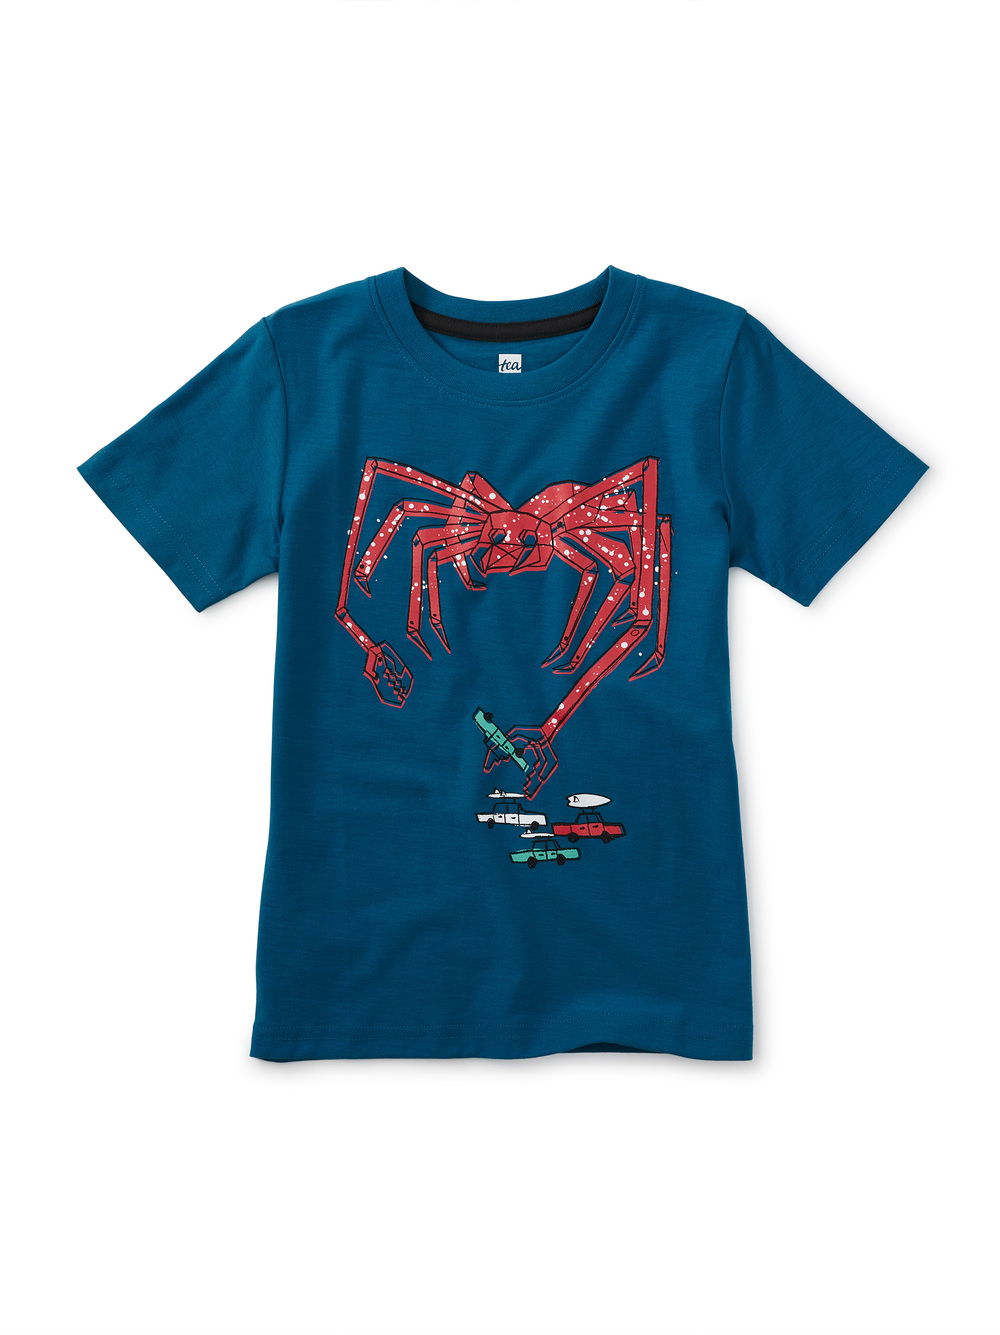 Spider Crab Graphic Tee